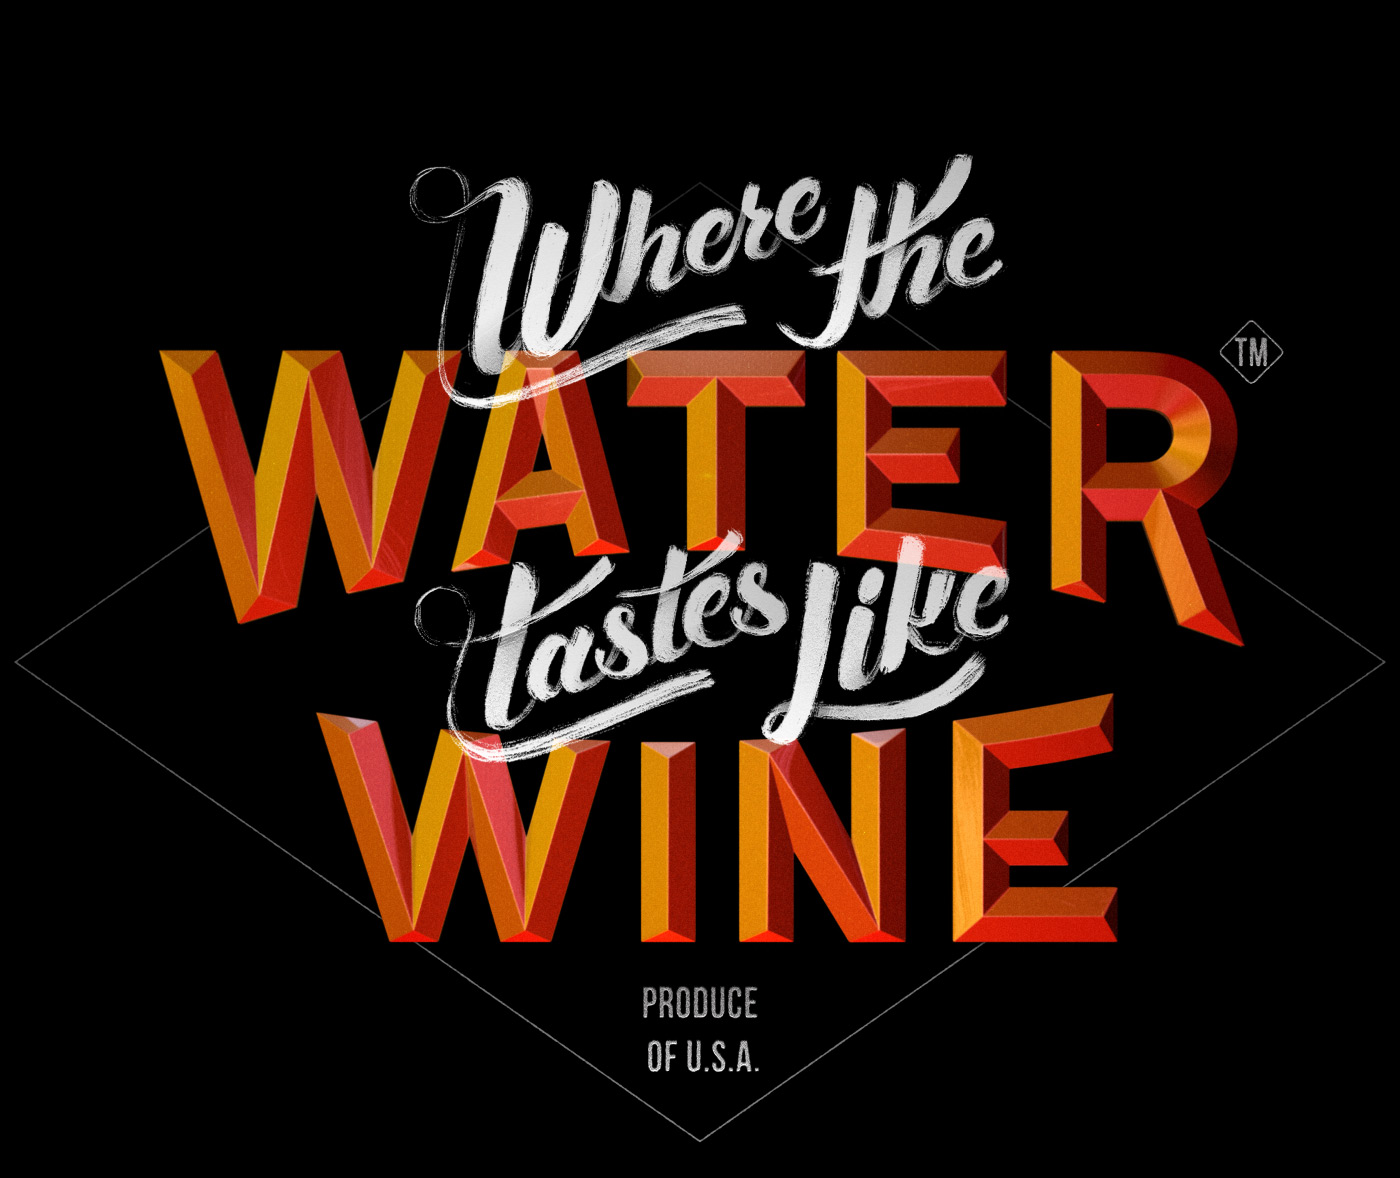 Taste like water. Where the Water tastes like Wine. Where is the Water tastes like Wine. Where the Water tastes игра. Where the Waters tastes like Wine DS,hfnm zpsr.